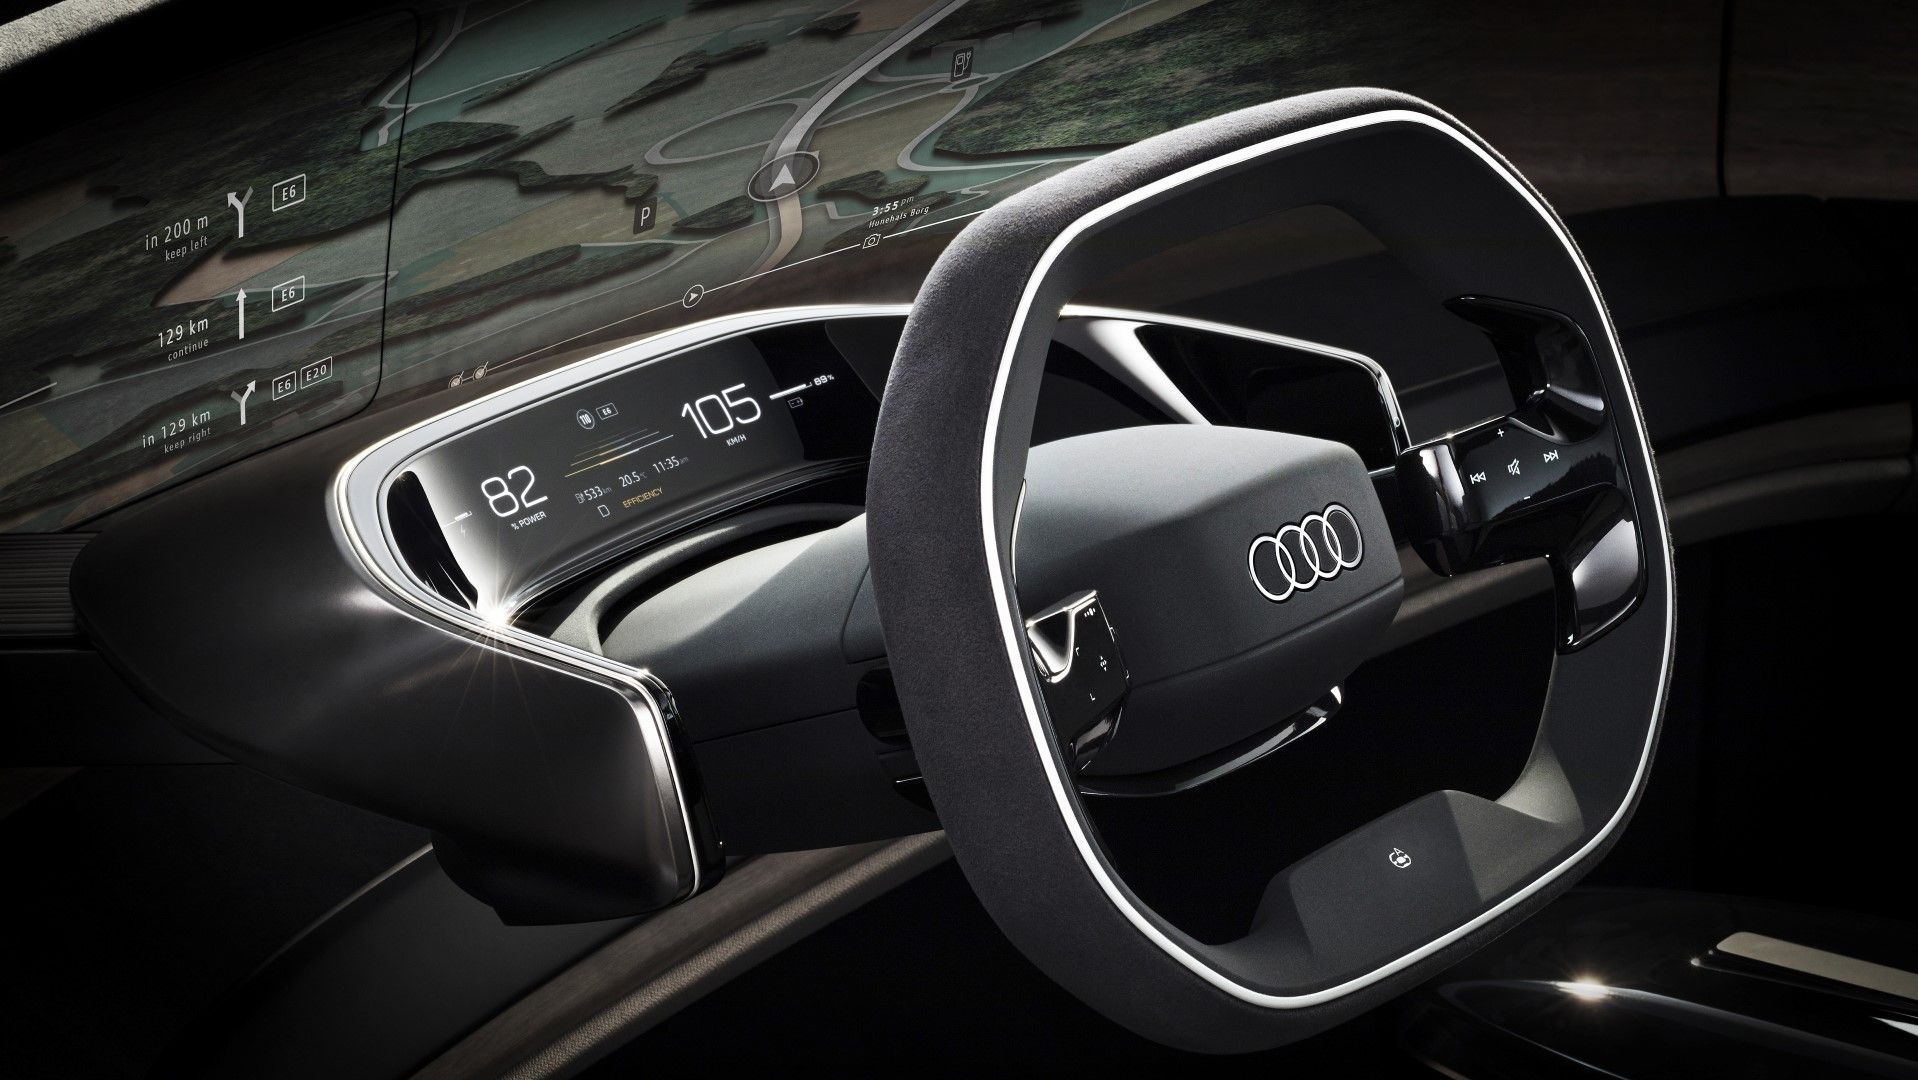 Audi grandsphere: Στις υπηρεσίες του Άγιου Βασίλη!